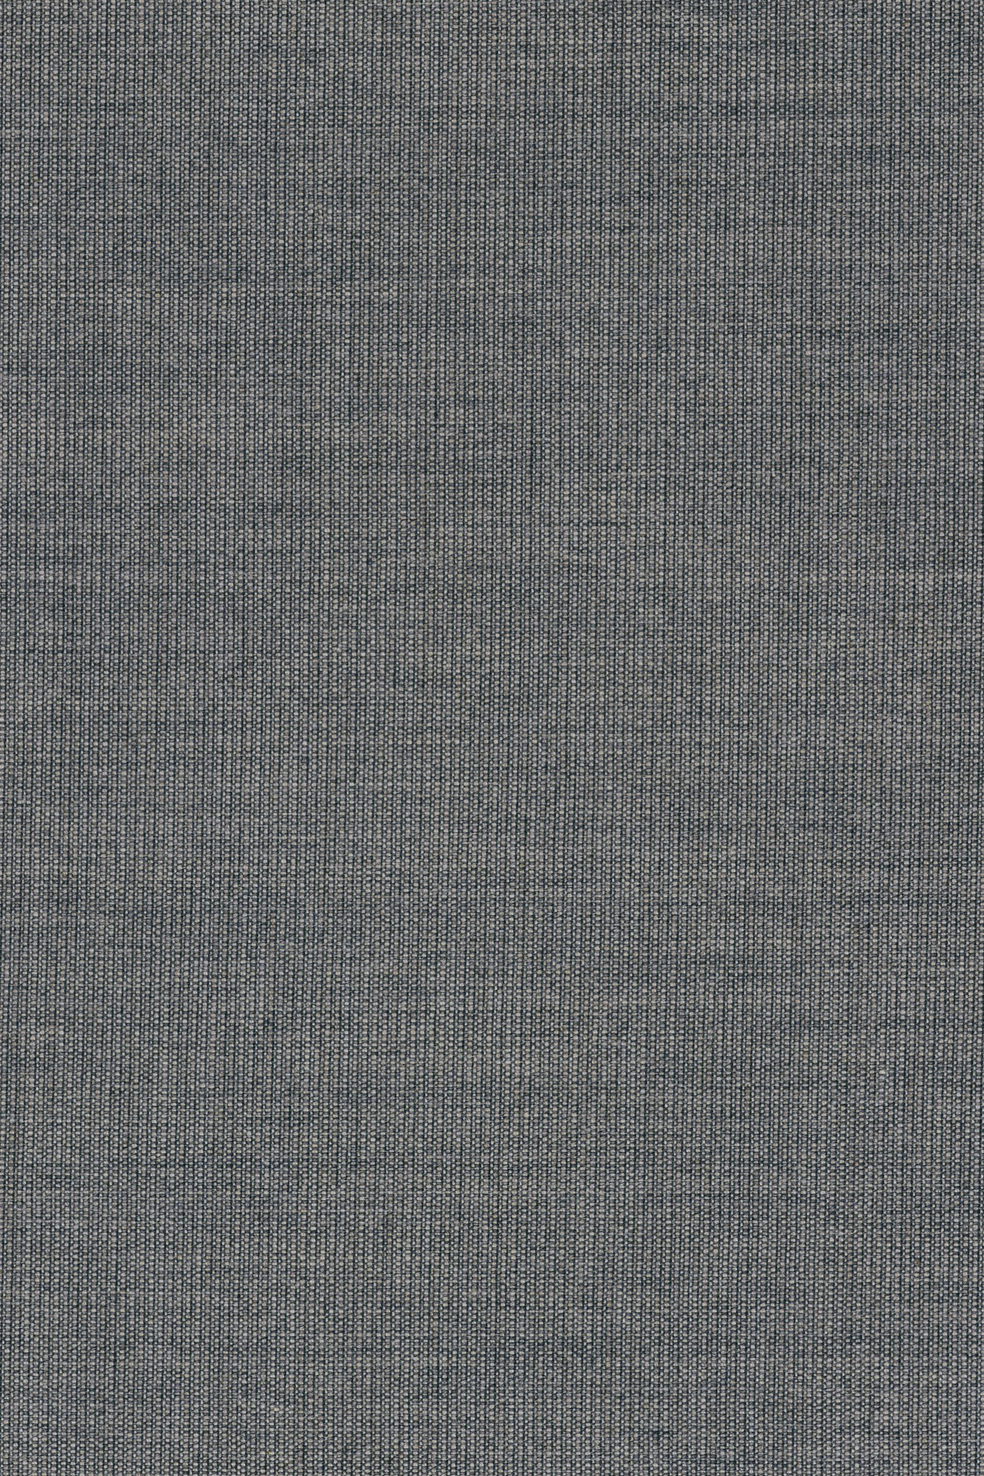 Fabric sample Canvas 2 134 grey